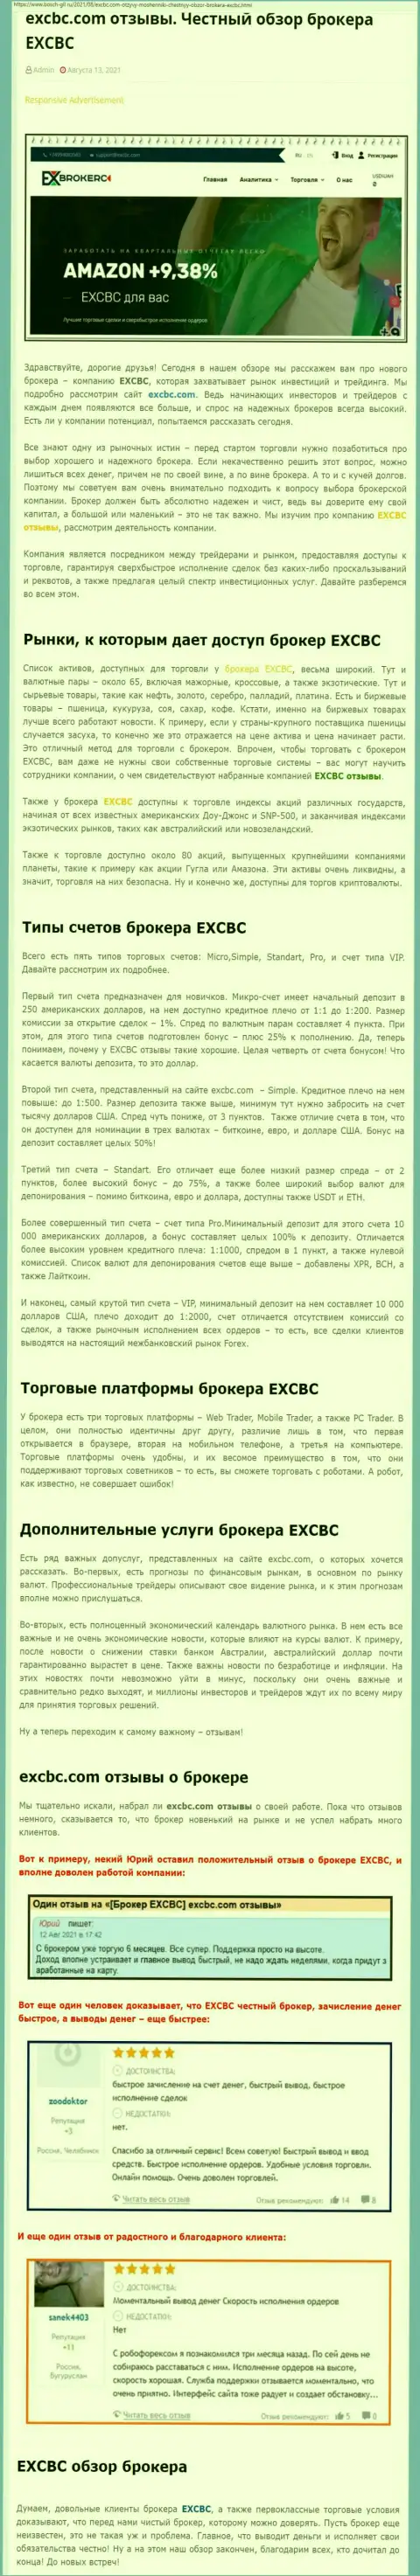 Публикация об форекс-организации EXCBC на веб-сервисе Bosch-Gll Ru